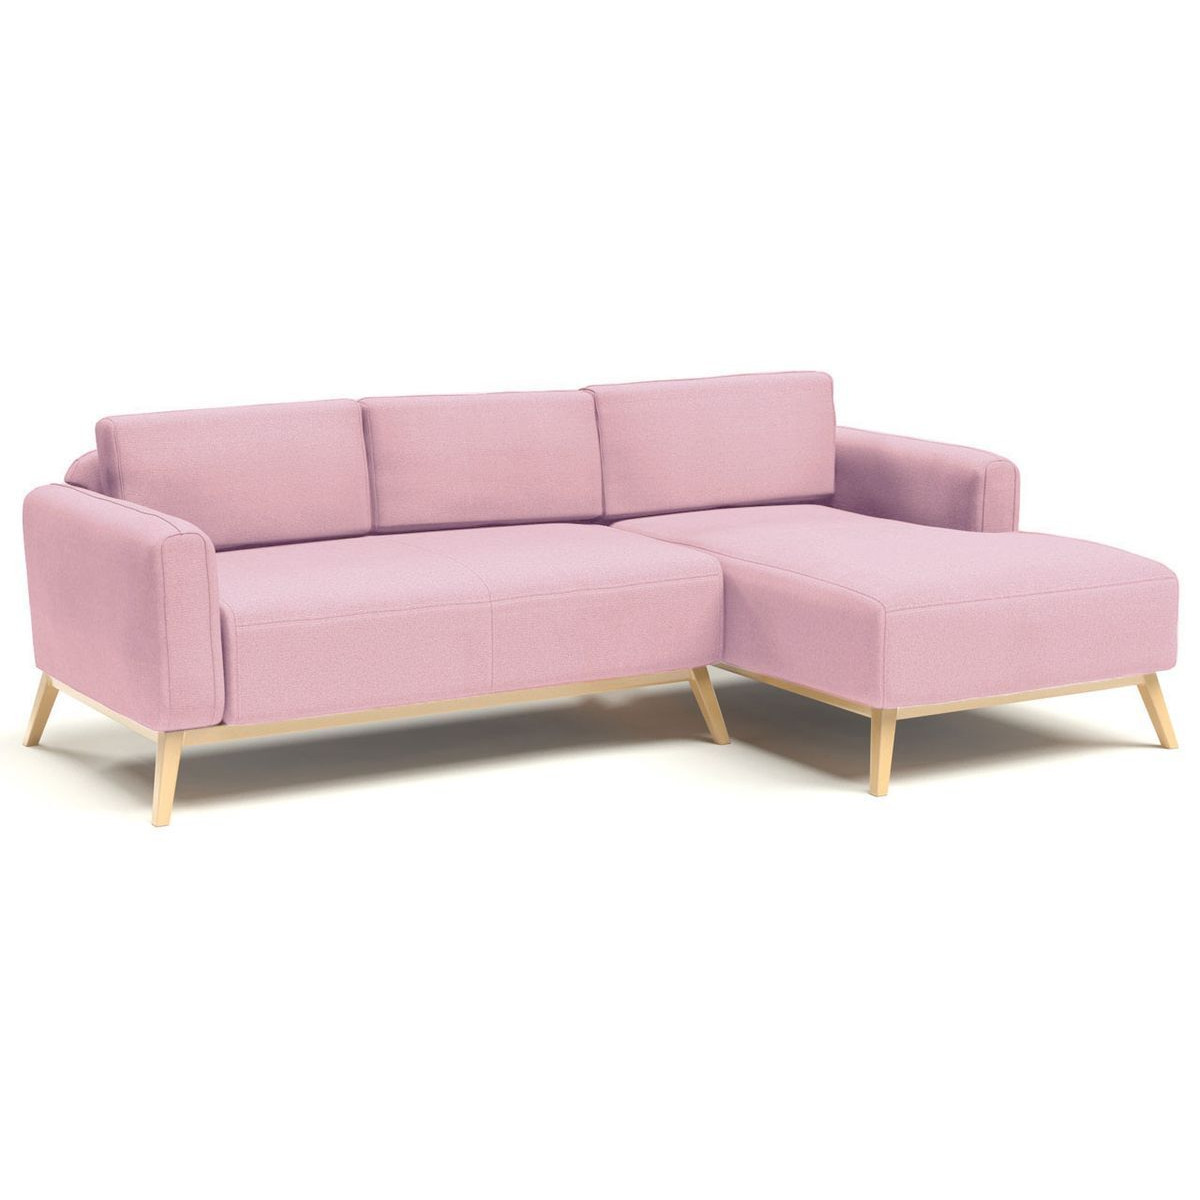 Modena Right Hand Corner Sofa, pink - image 1